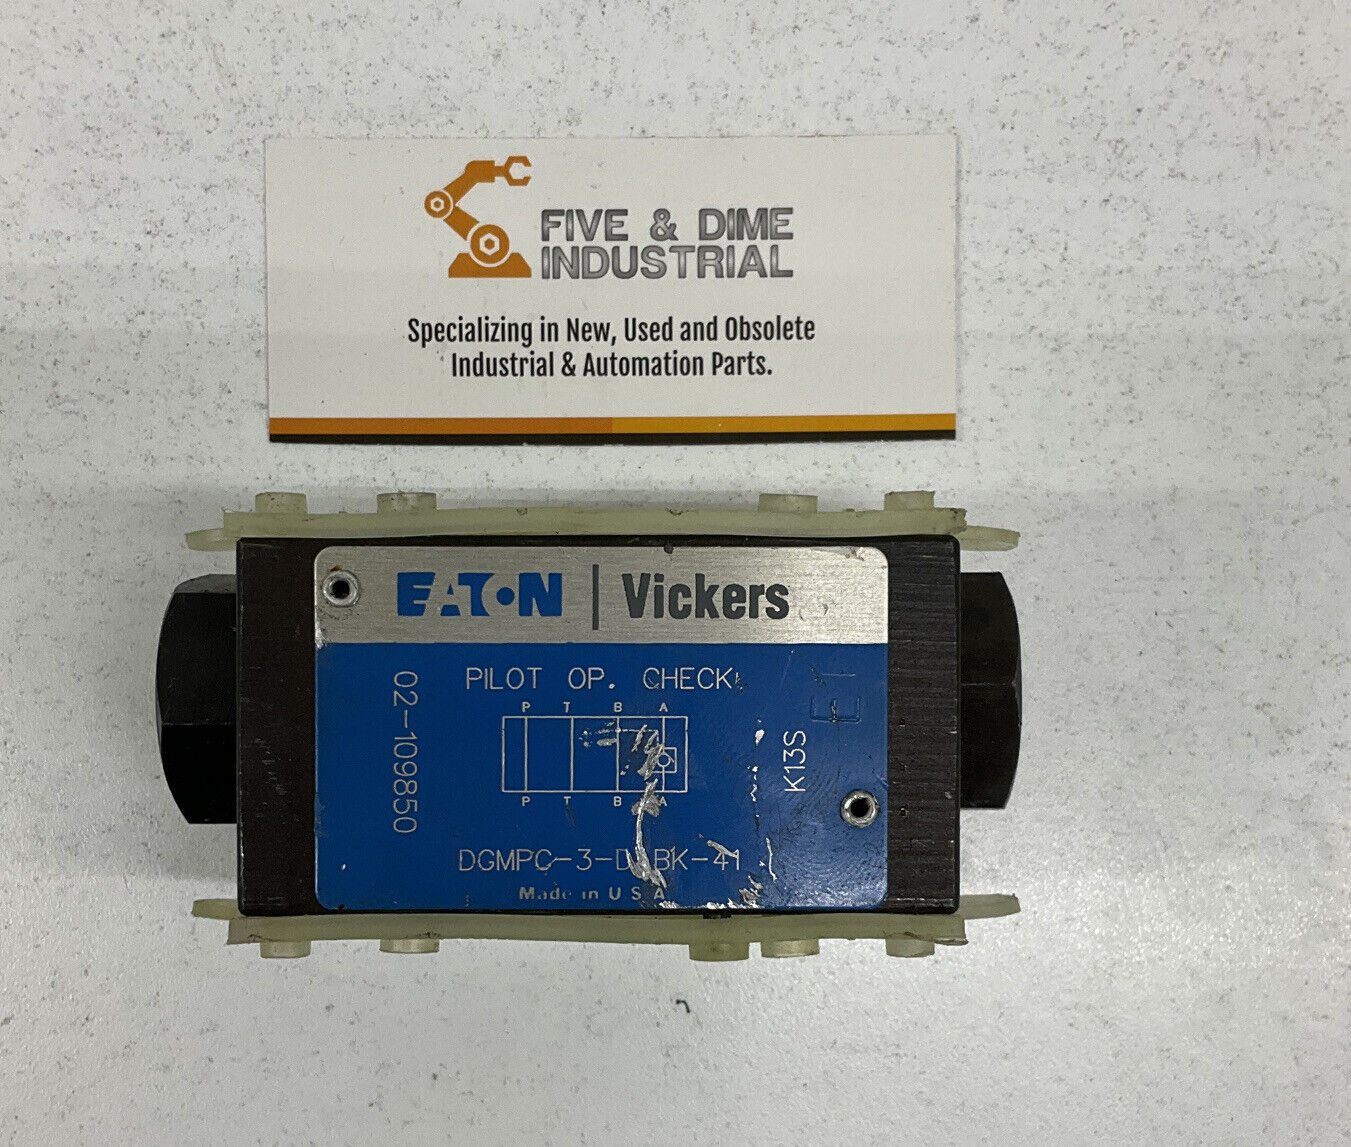 Eaton Vickers DGMPC-3-DABK-BAK-41 Pilot Check Valve 02-109850  (BL186)